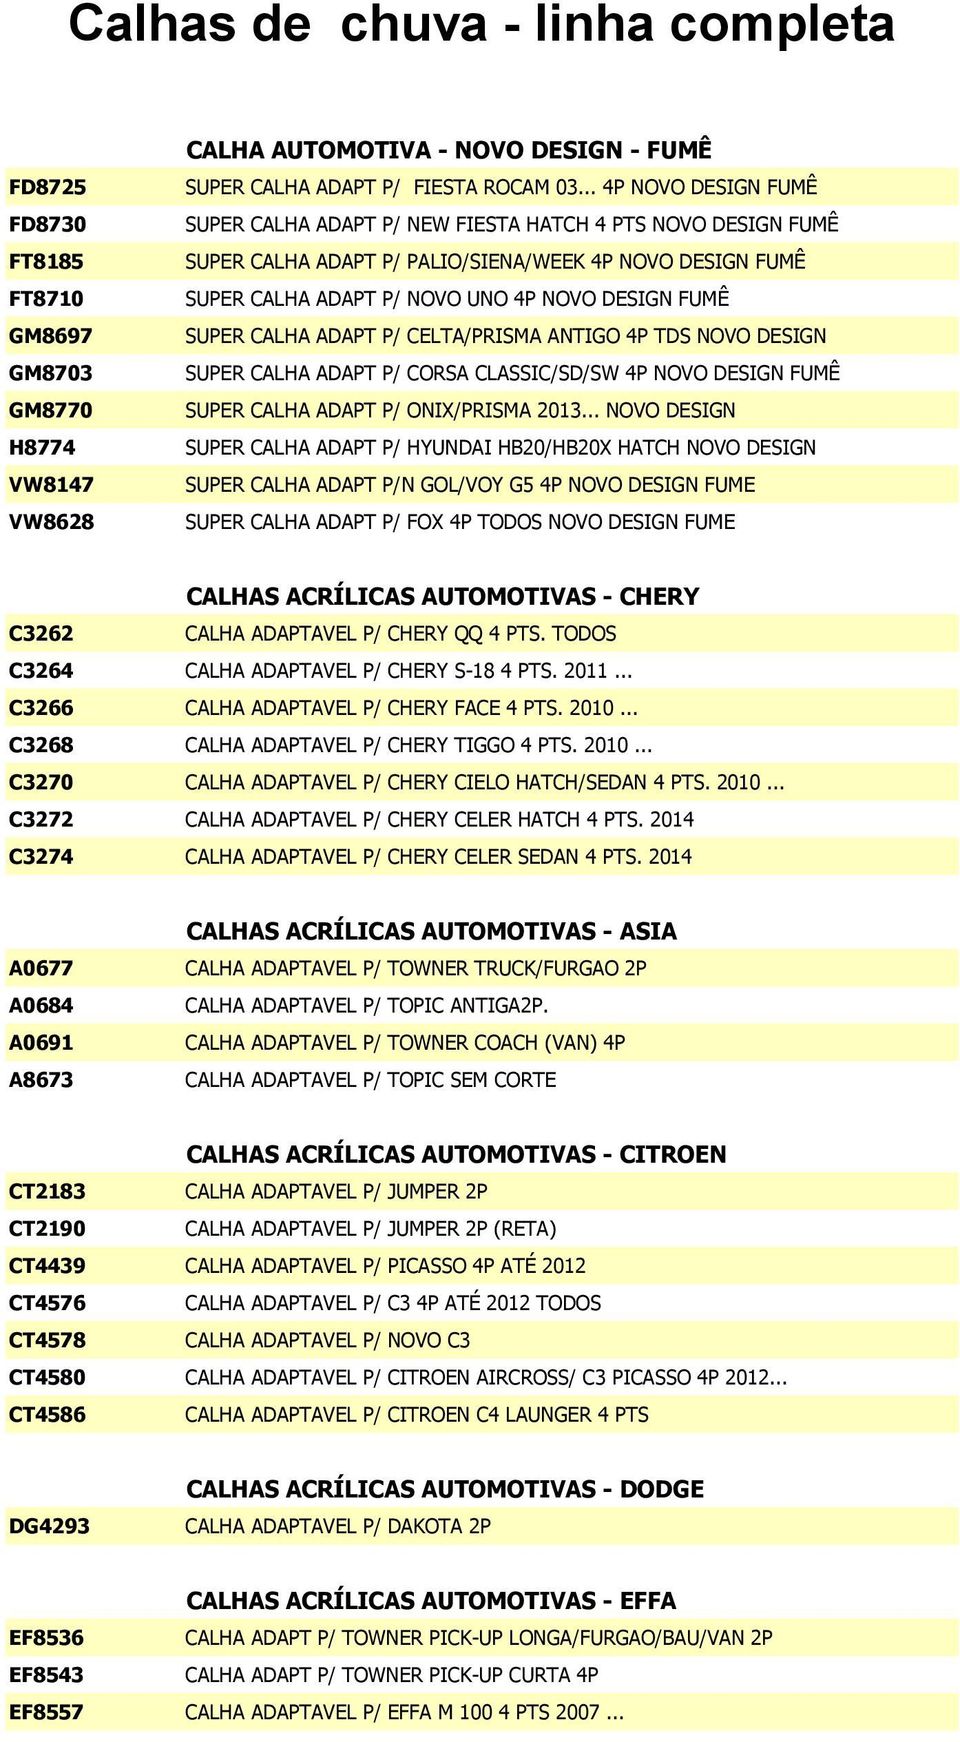 CALHA ADAPT P/ CELTA/PRISMA ANTIGO 4P TDS NOVO DESIGN SUPER CALHA ADAPT P/ CORSA CLASSIC/SD/SW 4P NOVO DESIGN FUMÊ SUPER CALHA ADAPT P/ ONIX/PRISMA 2013.